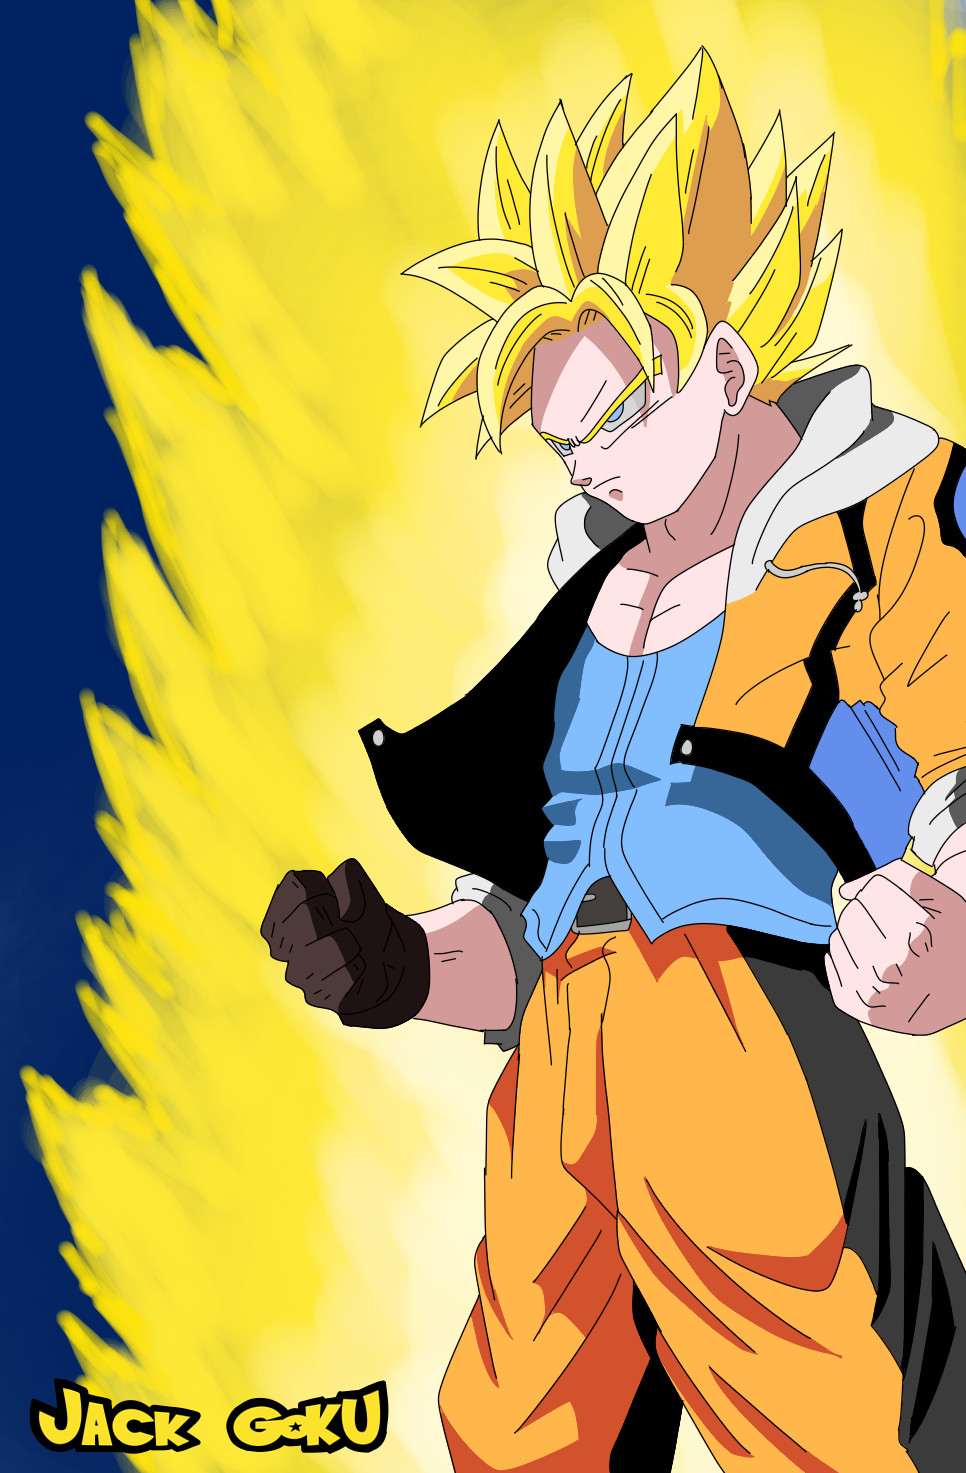 Goku Super Saiyan Power Up! by DragonBallAffinity on DeviantArt